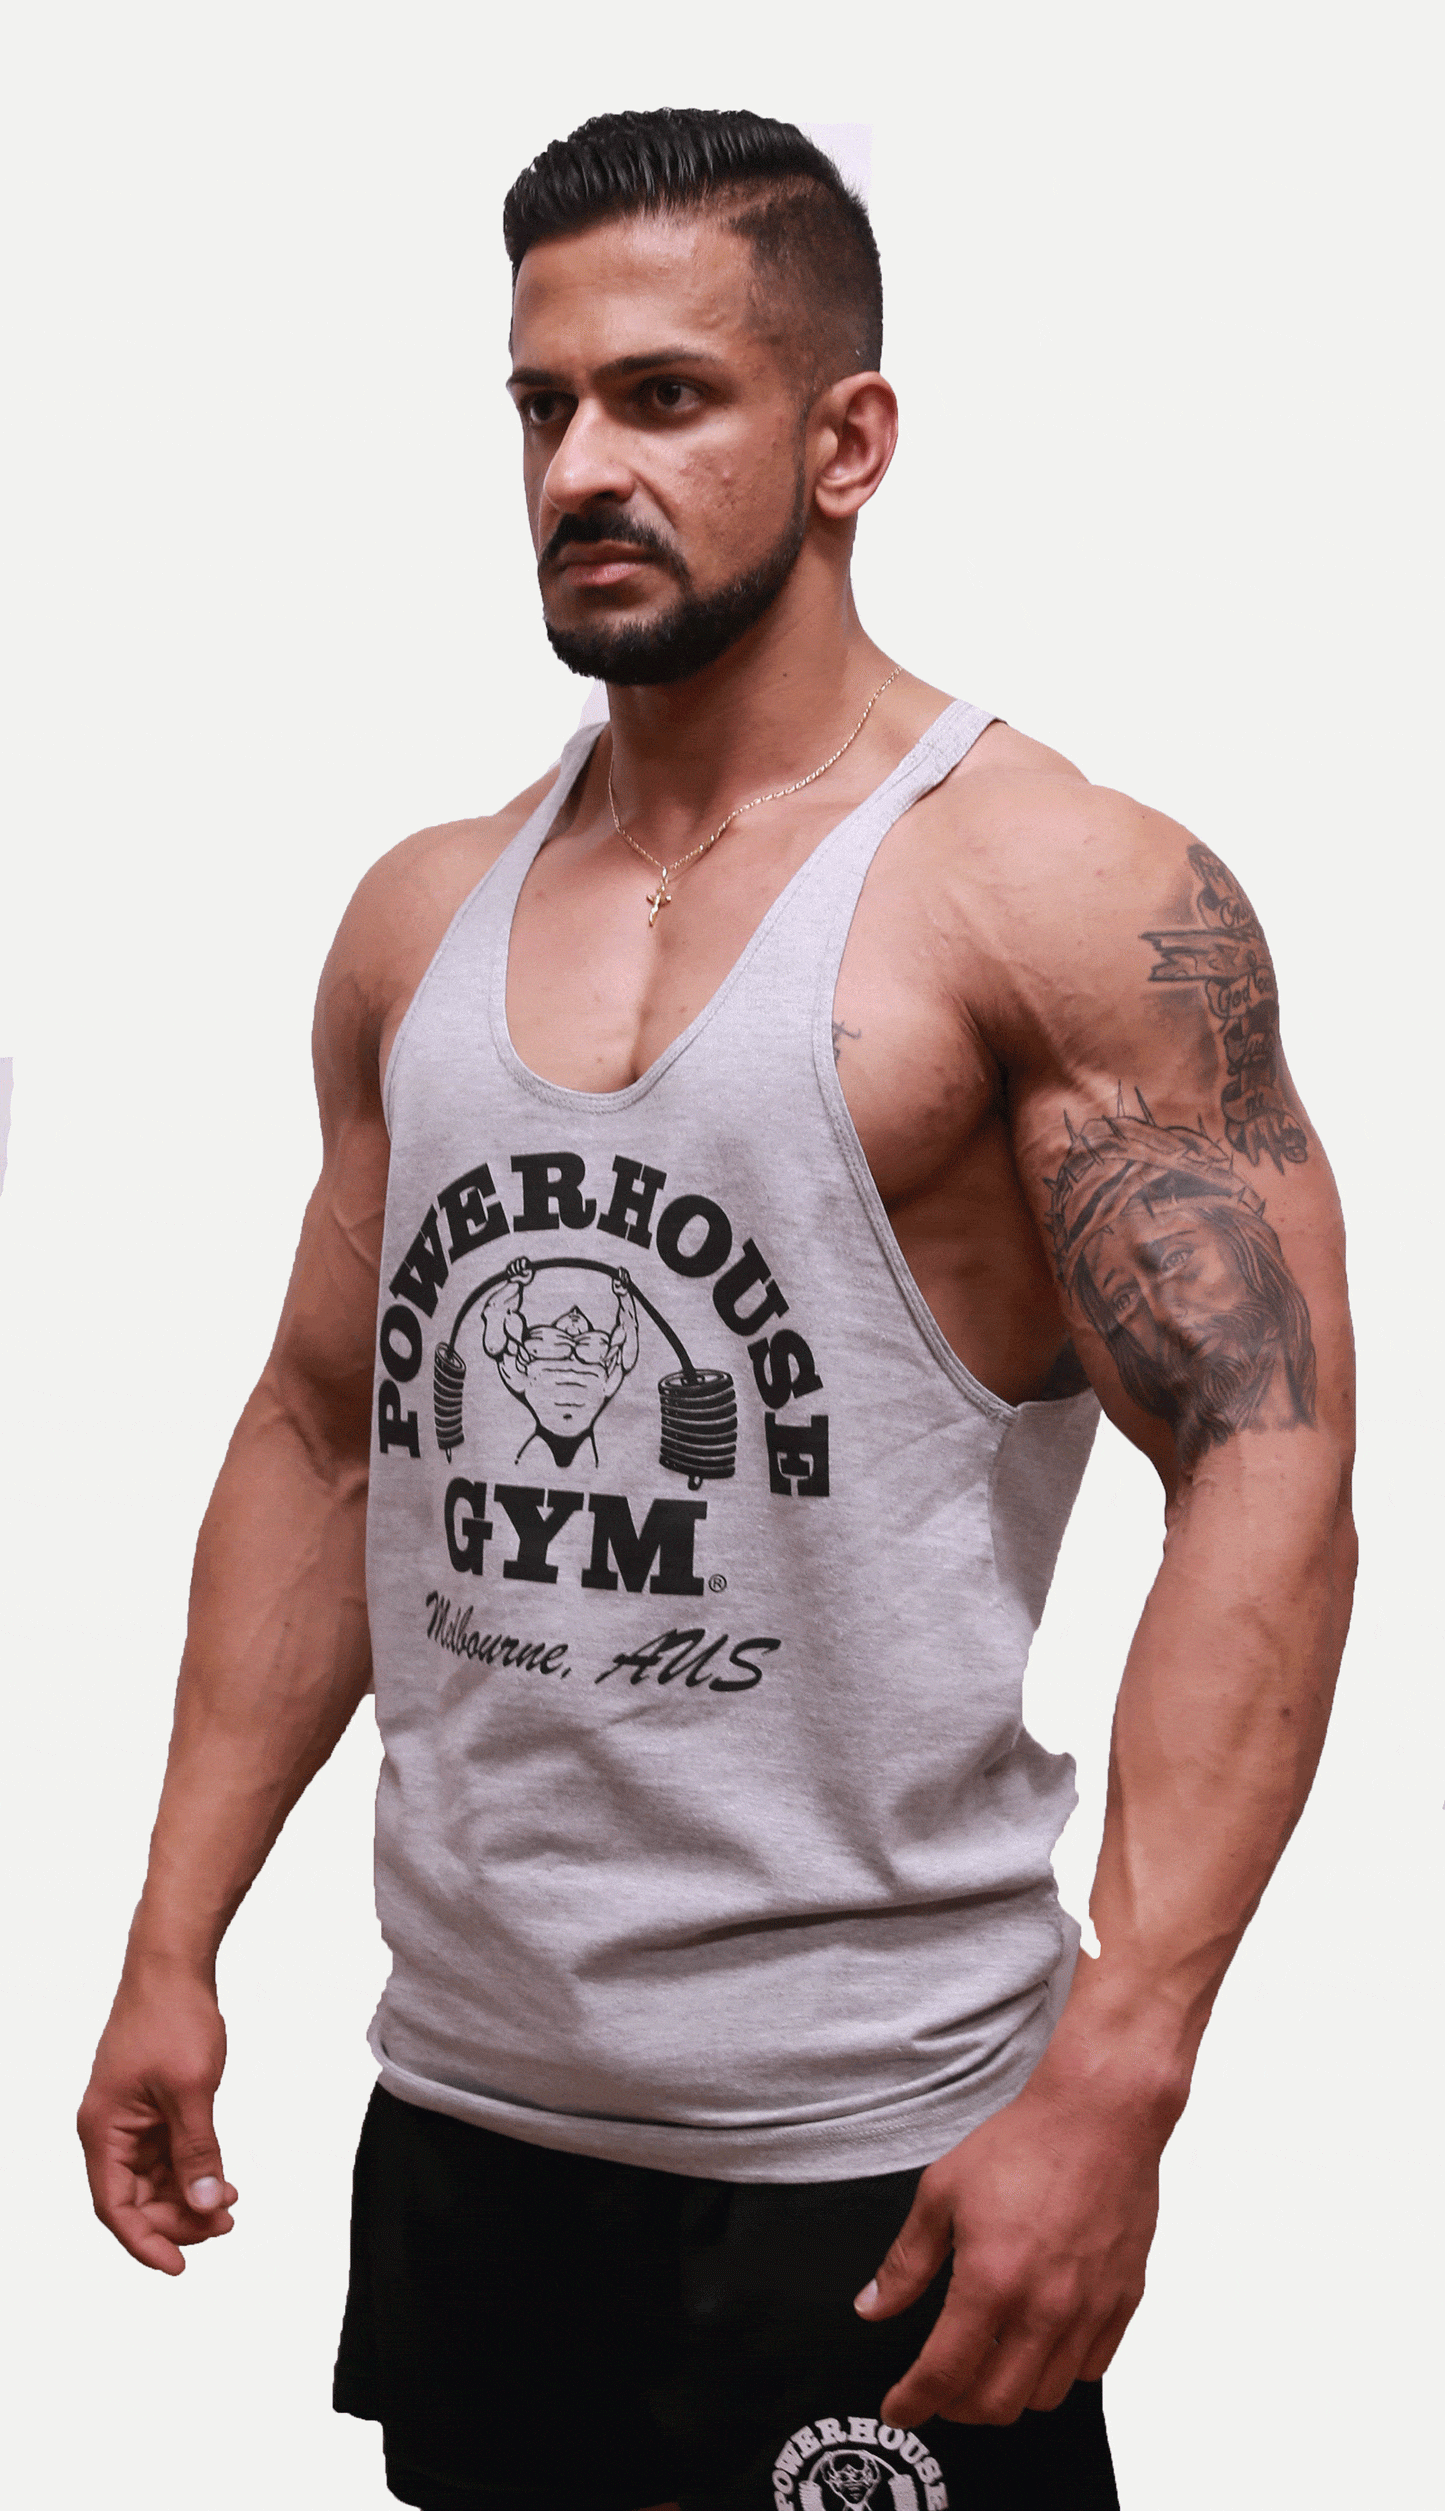 Powerhouse Gym Pro Shop T-Back Tank - Black on Grey